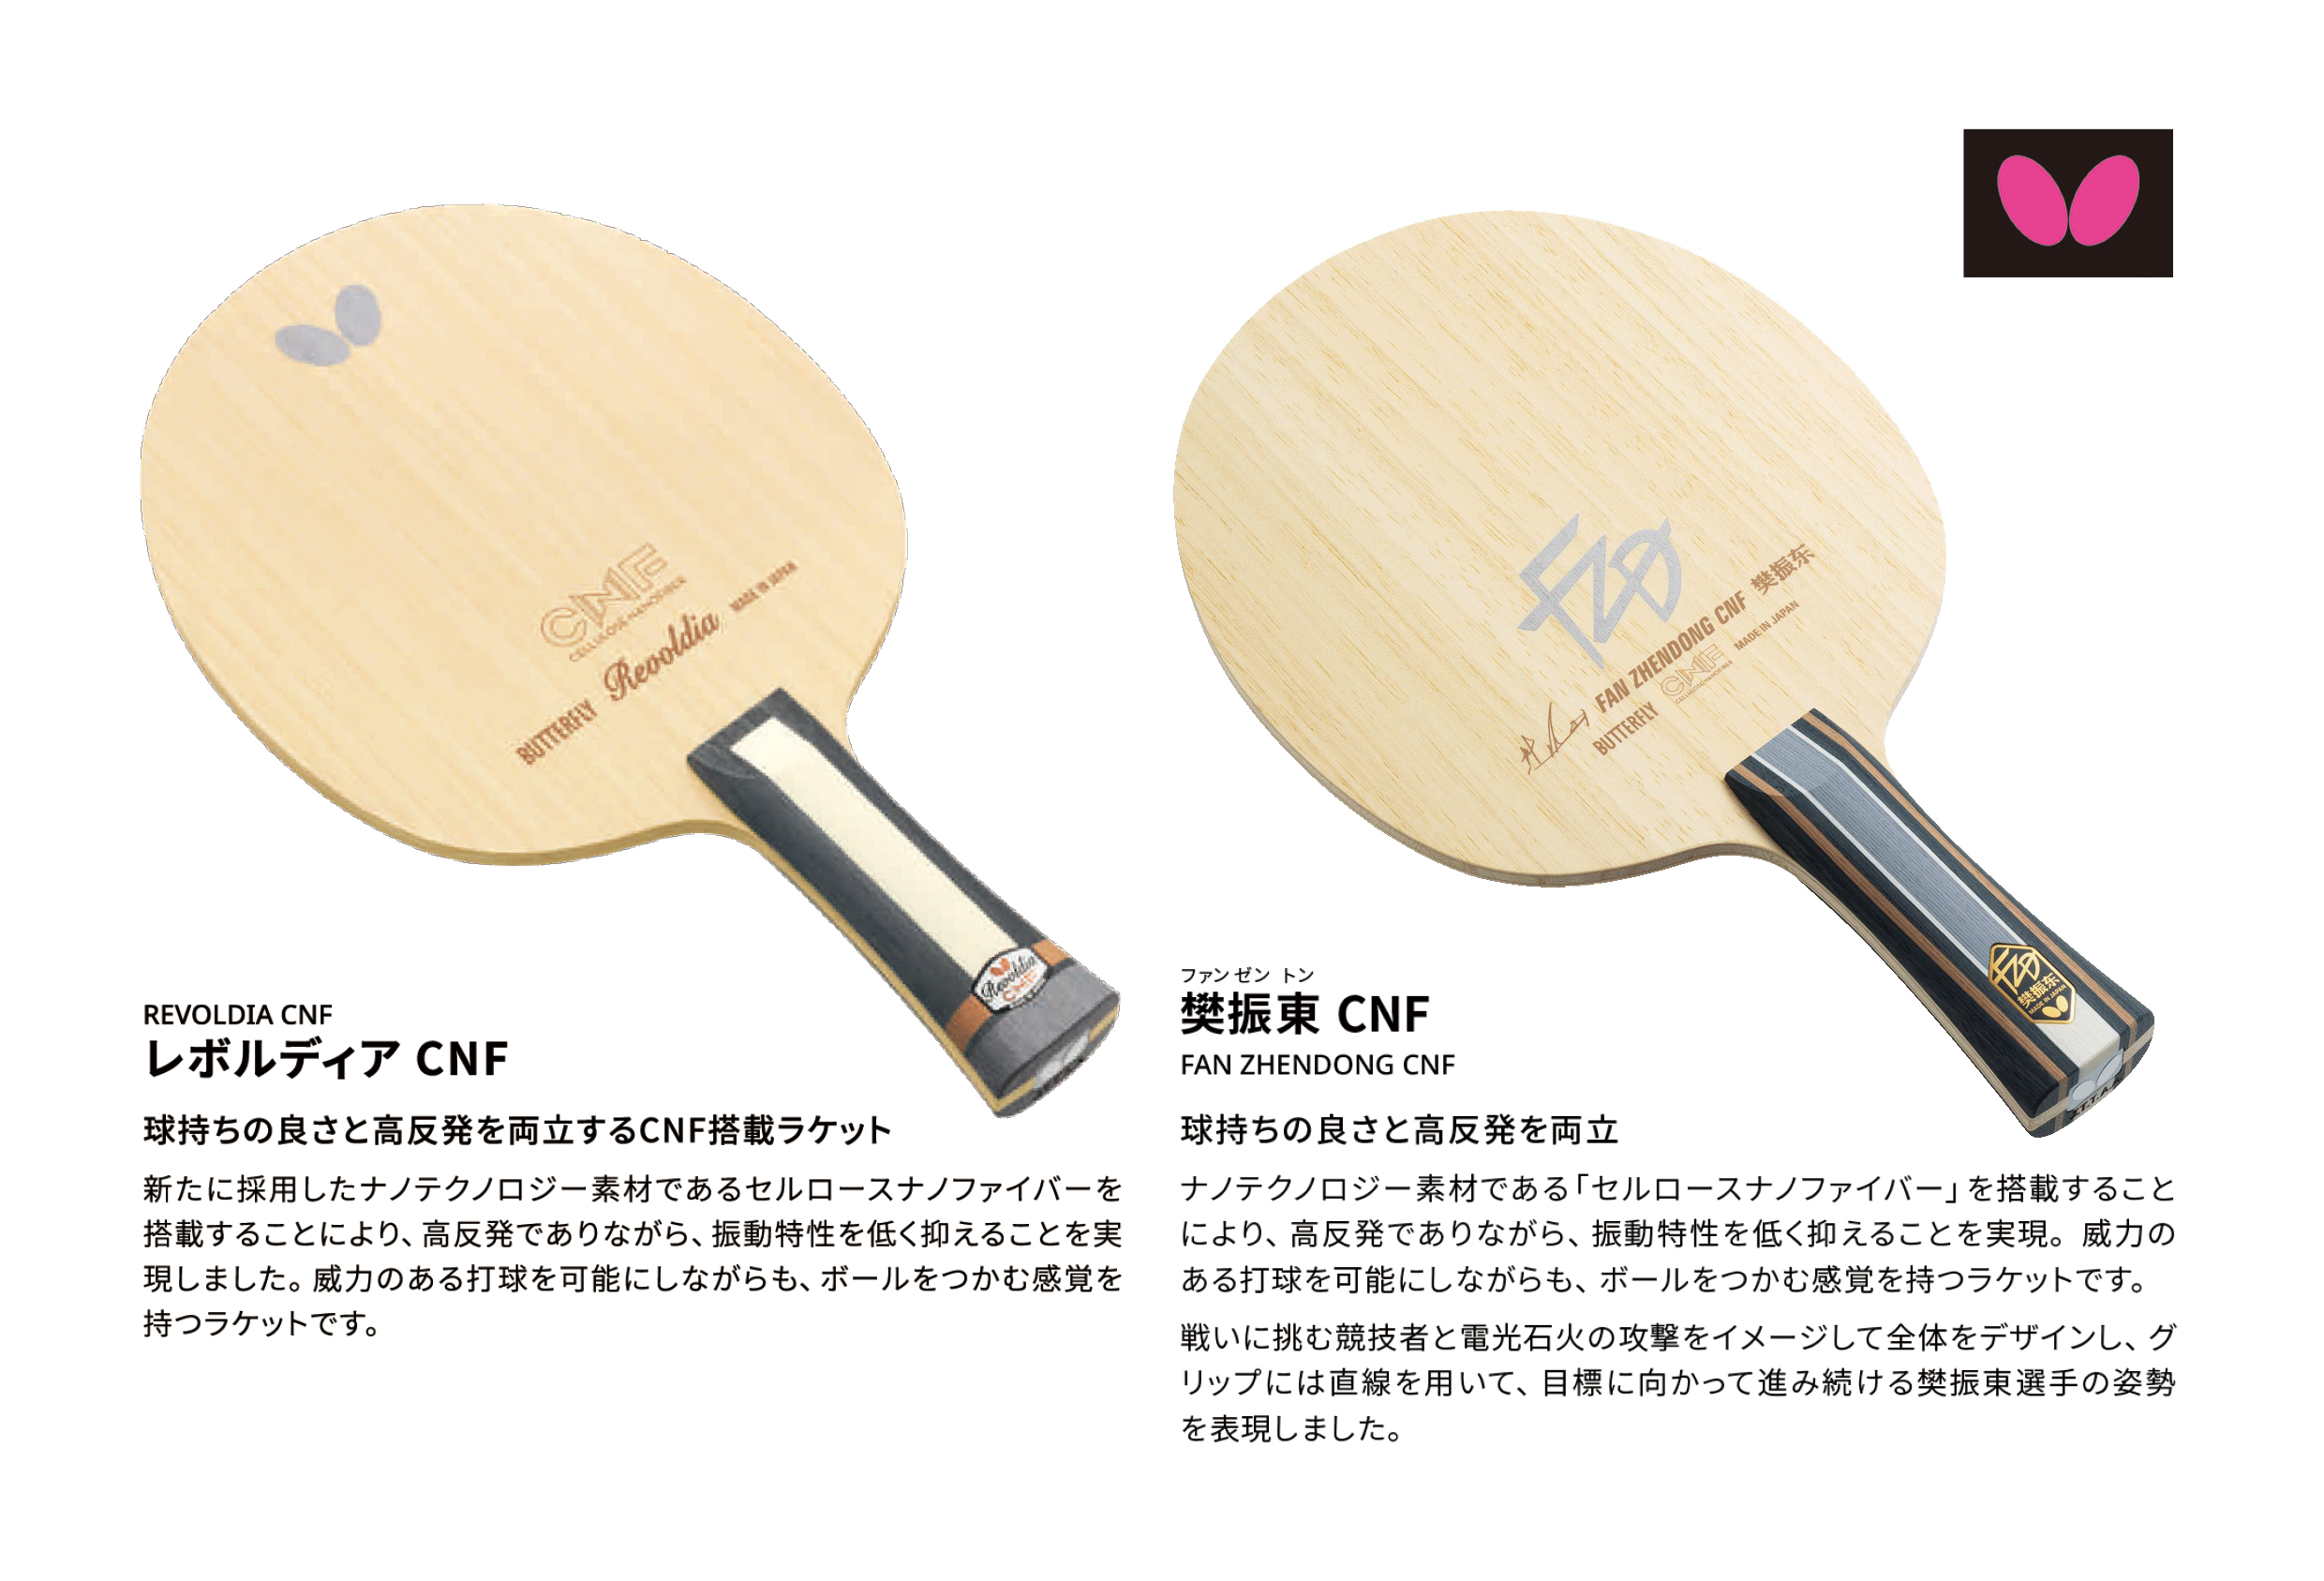 CNF成形体ELLEX-Mを搭載した高性能卓球ラケット画像